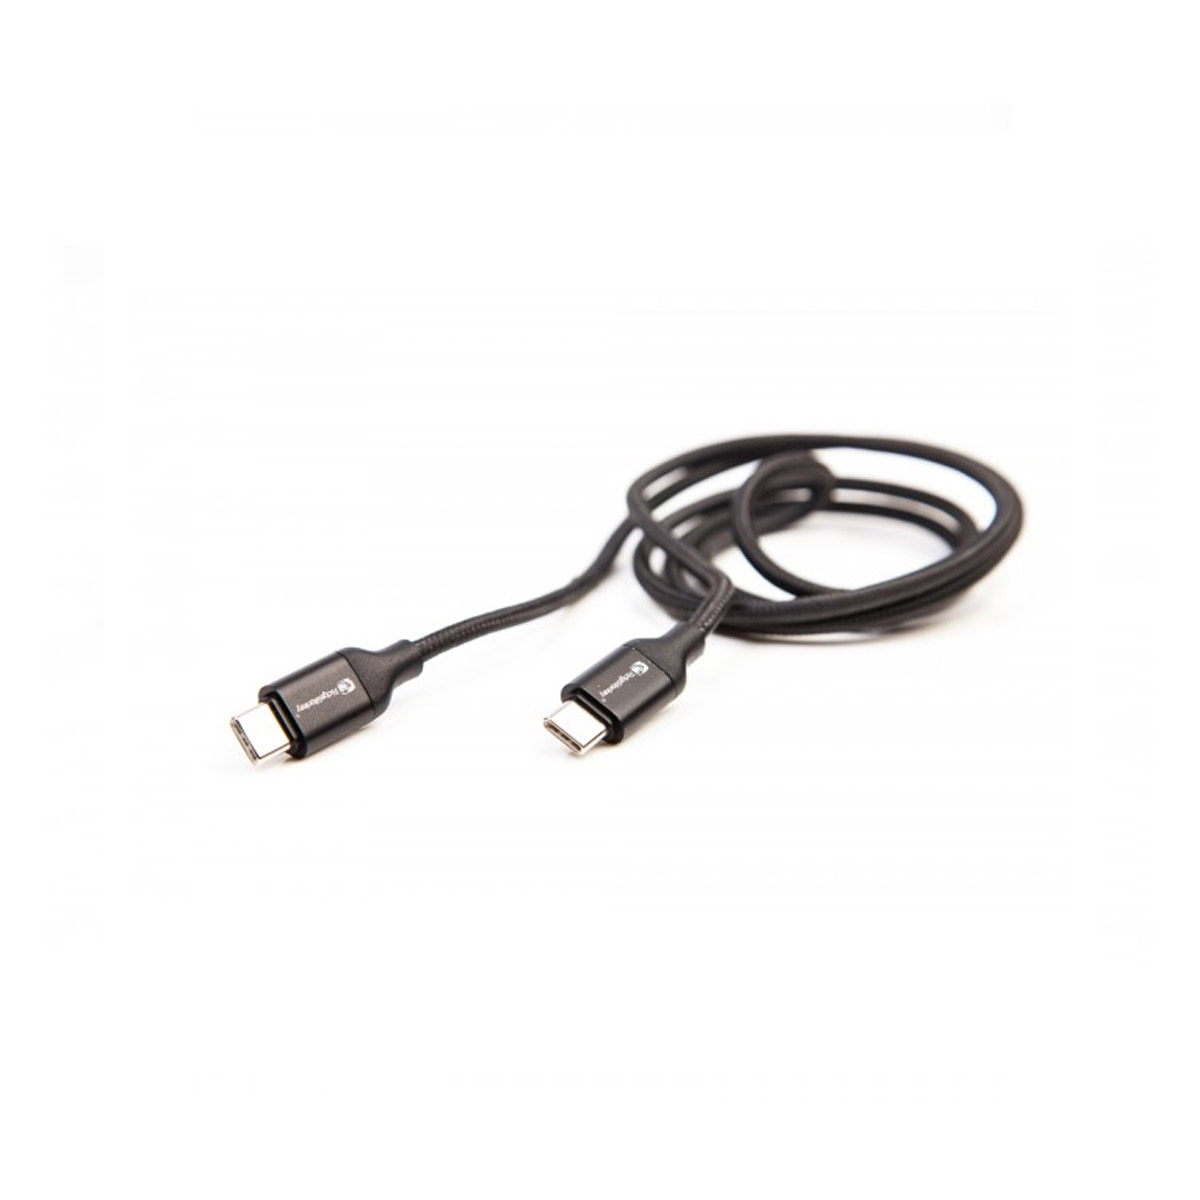 Ridgemonkey Vault USB C to USB C Cable